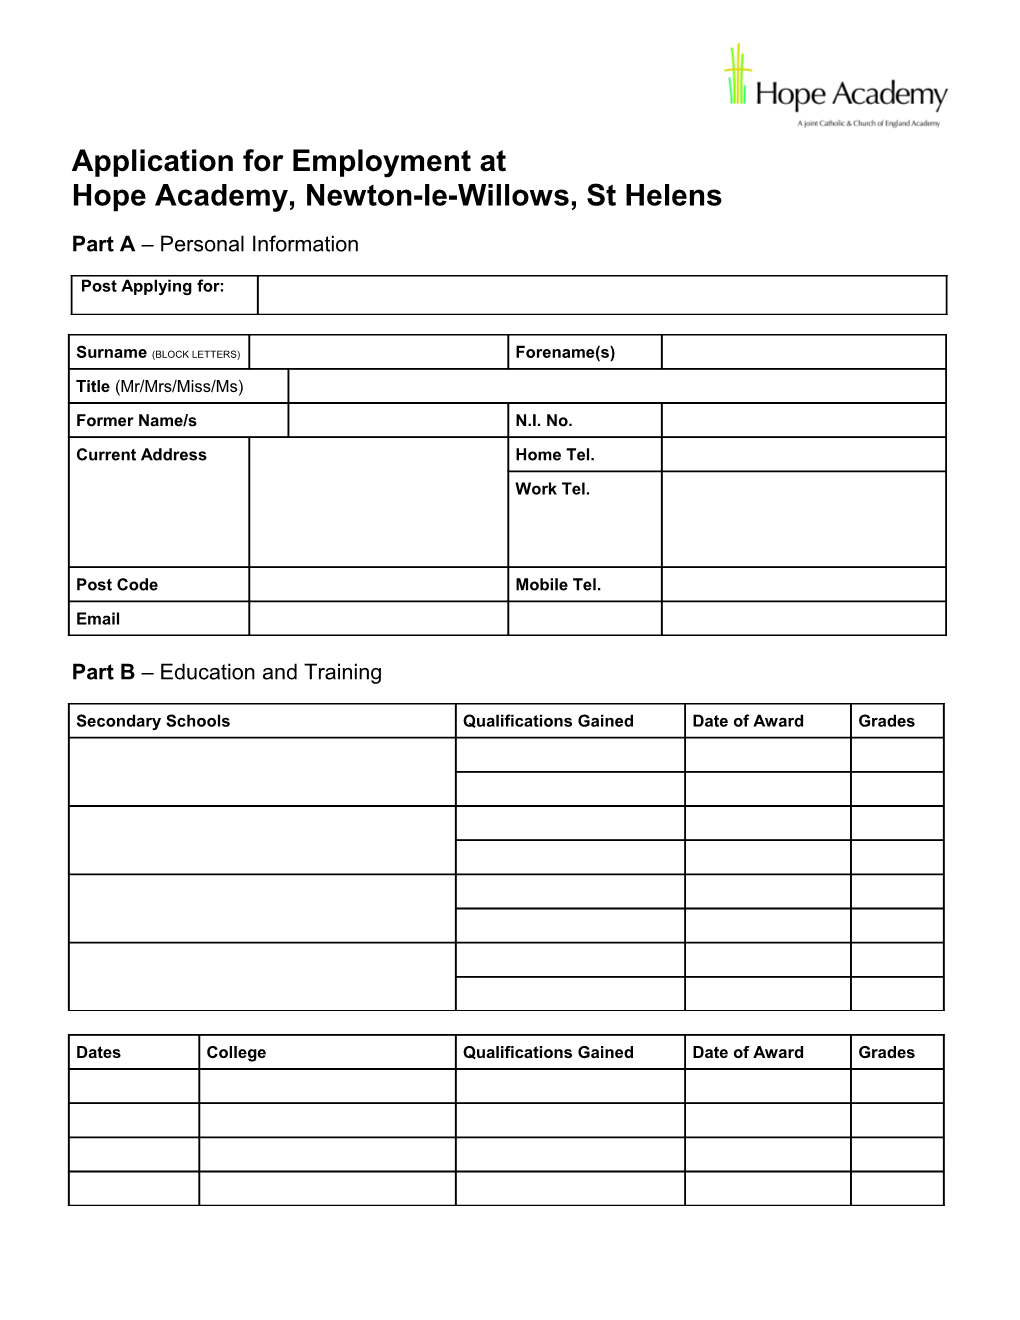 Hope Academy, Newton-Le-Willows, St Helens